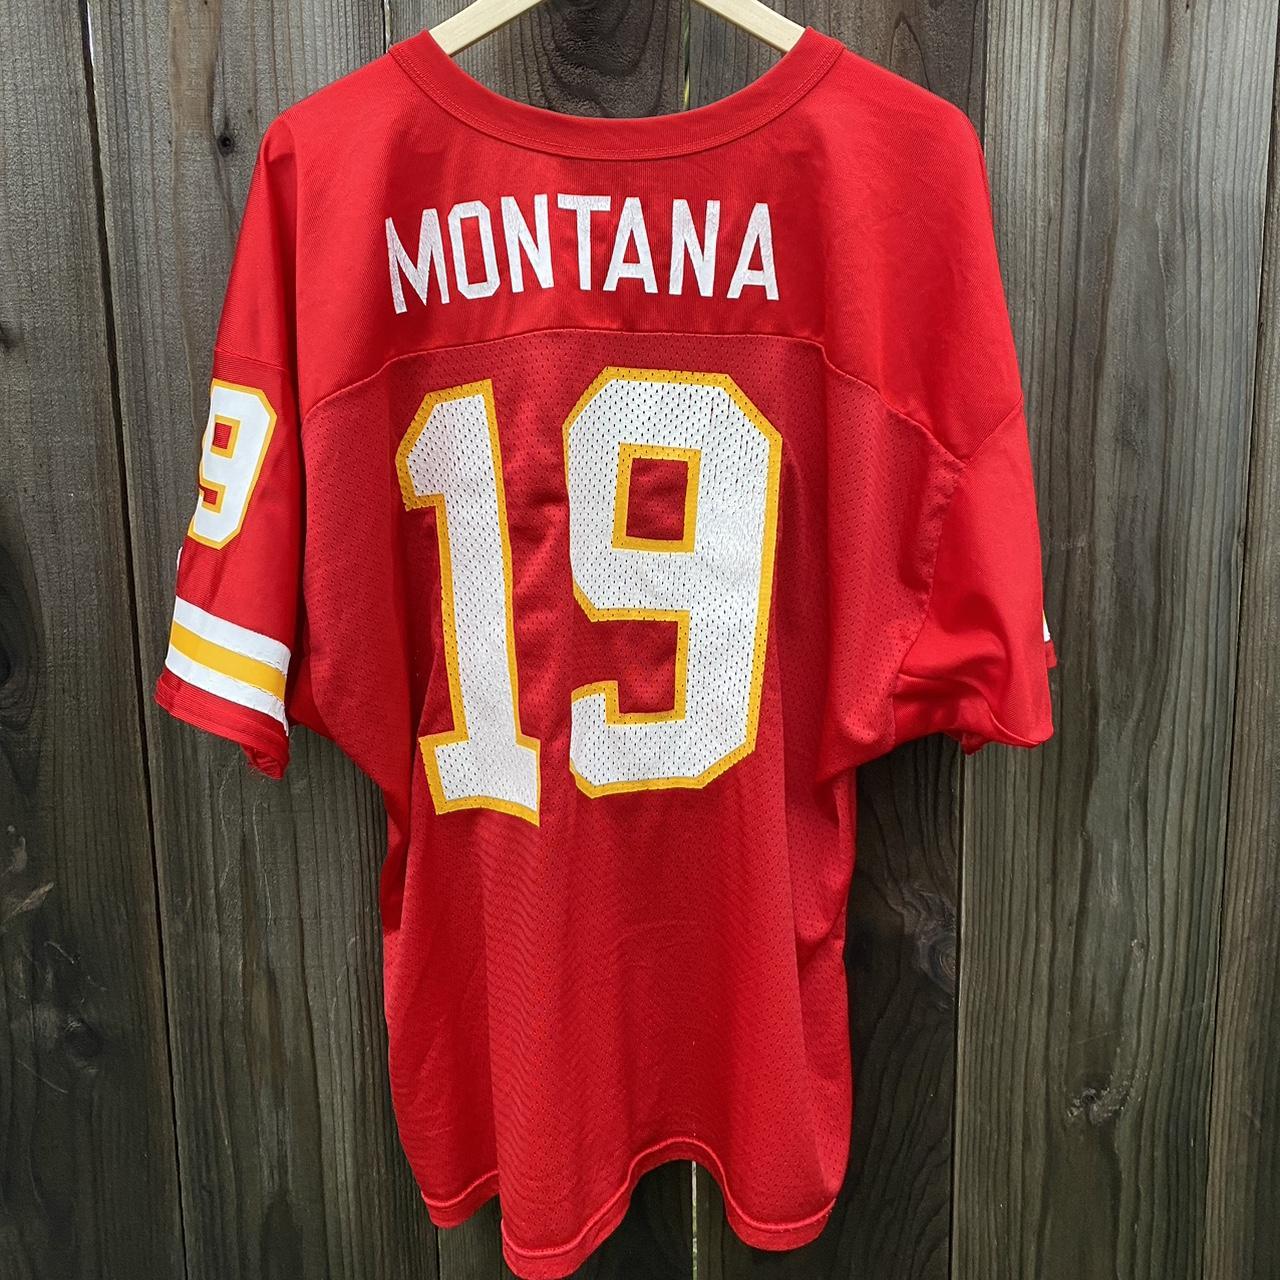 Joe Montana vintage jersey